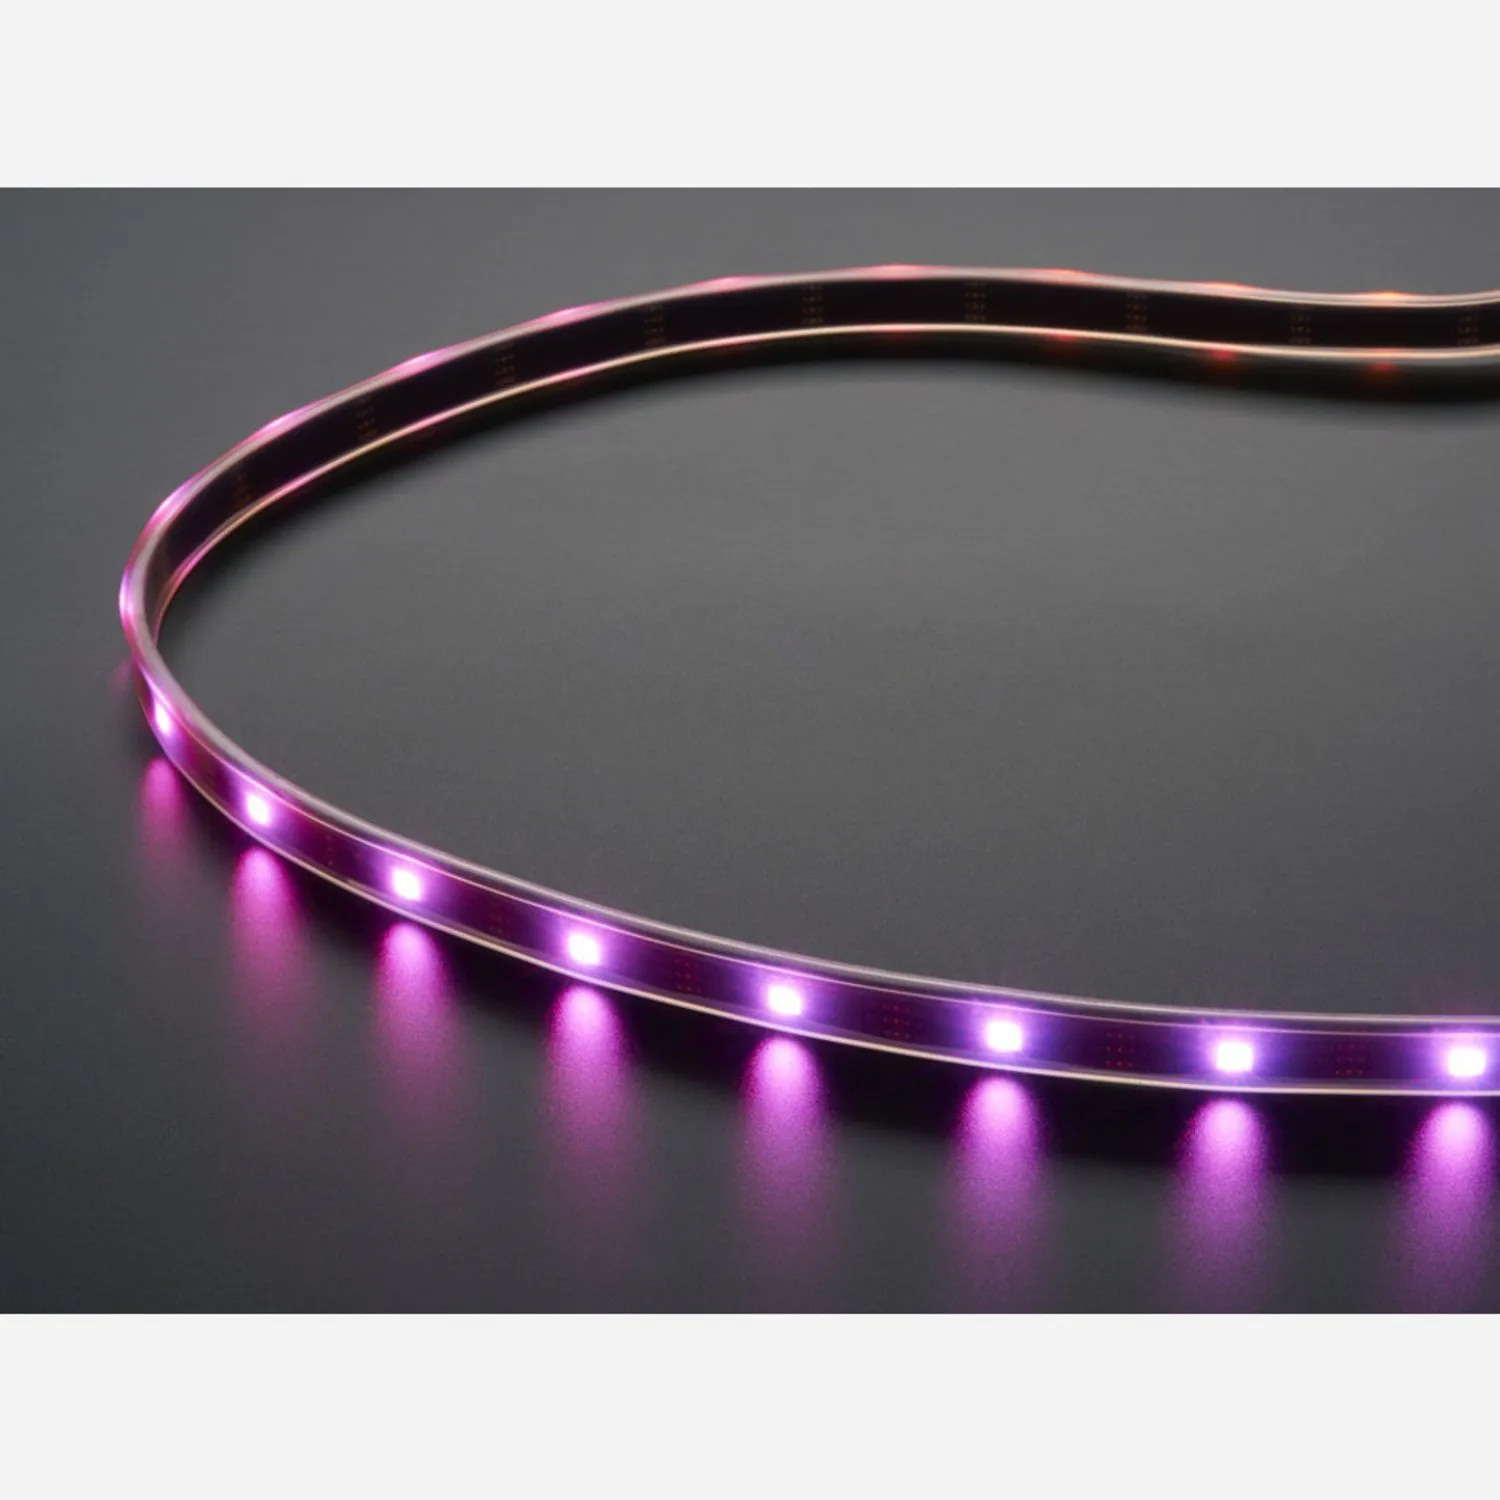 Photo of Adafruit DotStar Digital LED Strip - Black 30 LED - Per Meter [BLACK]